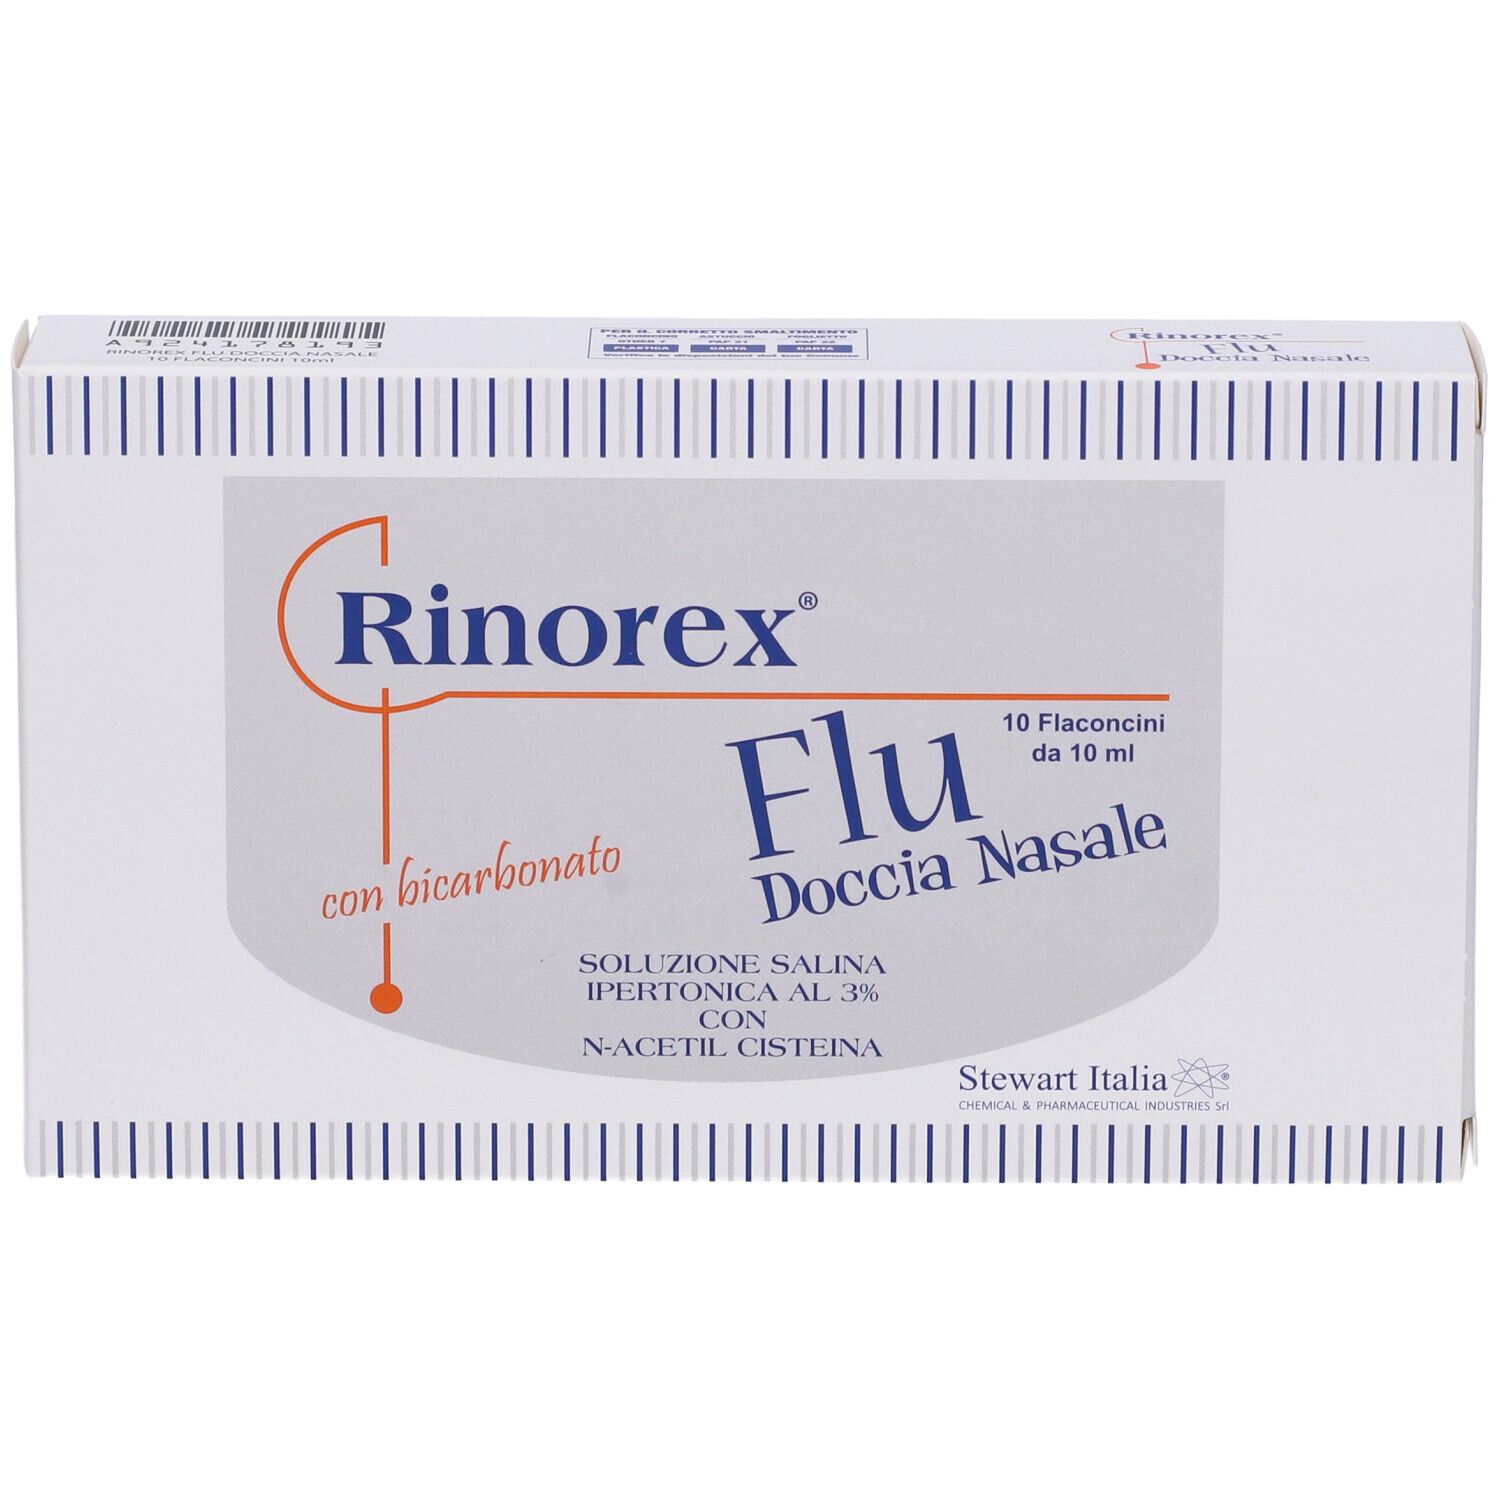 Rinorex® Flu Doccia Nasale